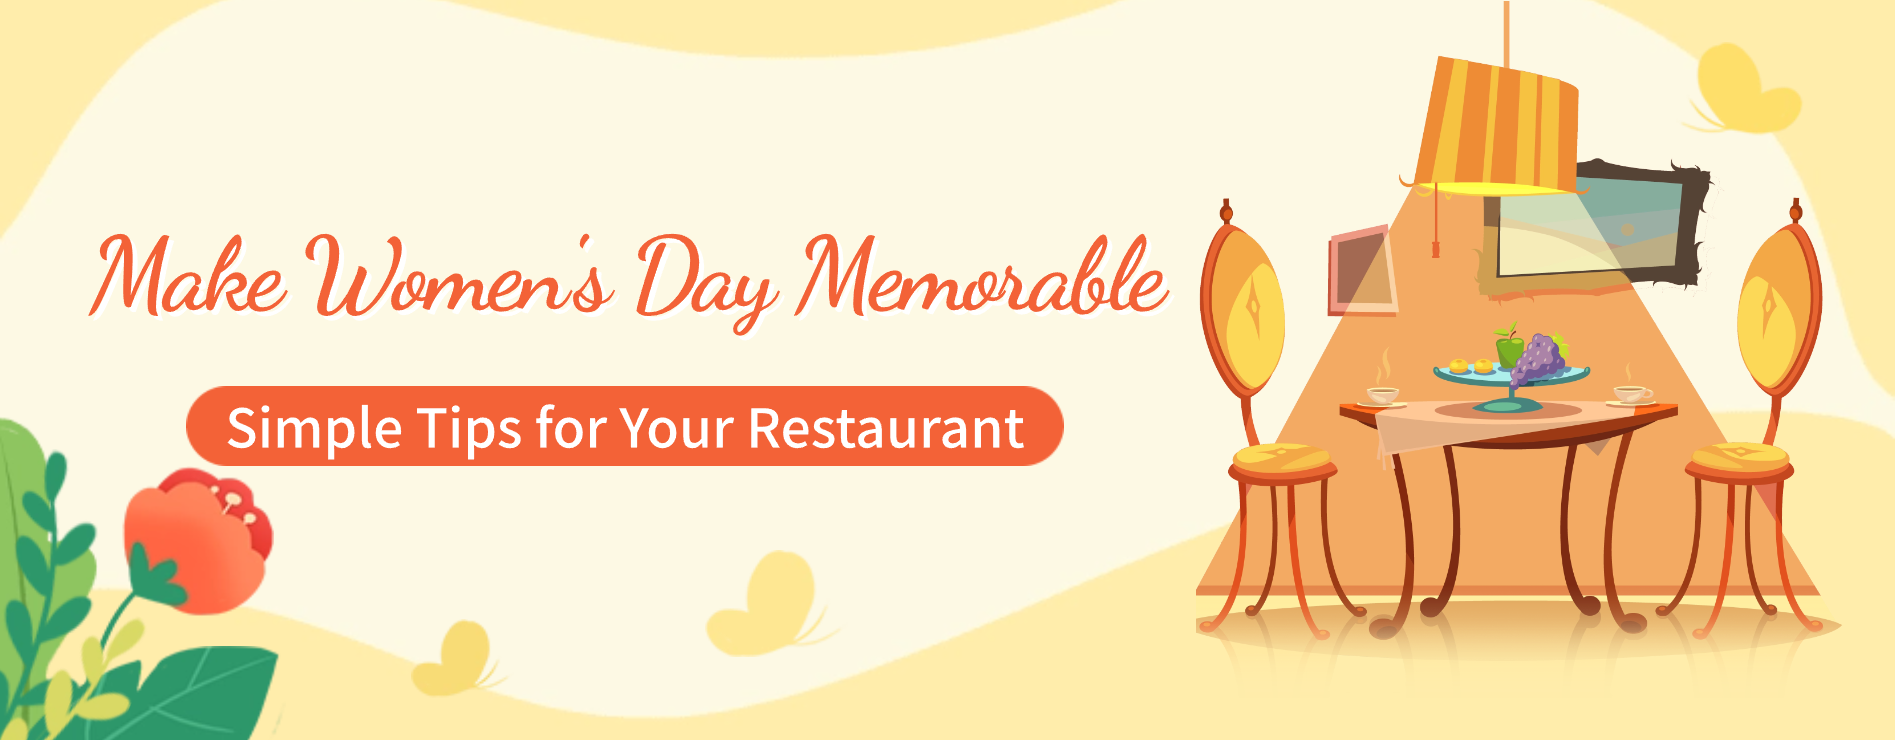 Make Women's Day&nbsp;Memorable: Simple Tips for Your Restaurant